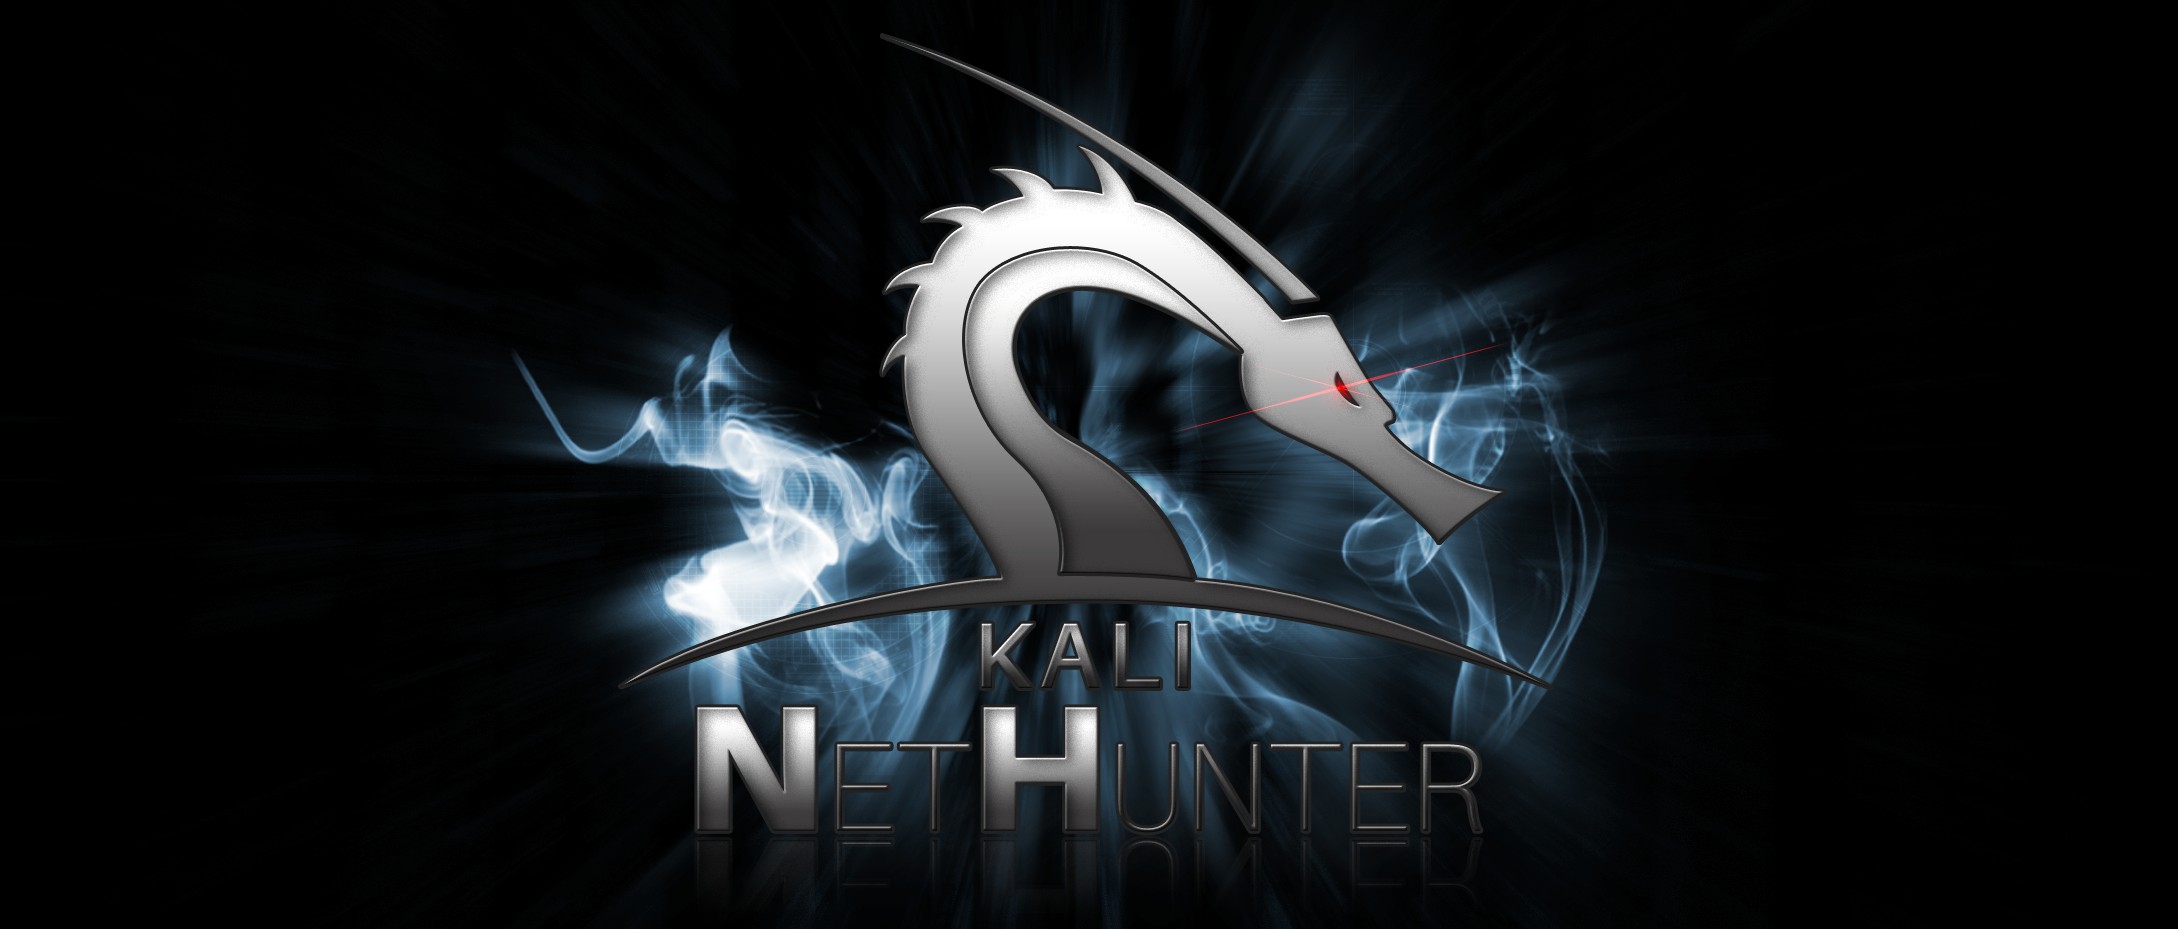 Linux, Kali Linux NetHunter, Kali Linux Wallpaper